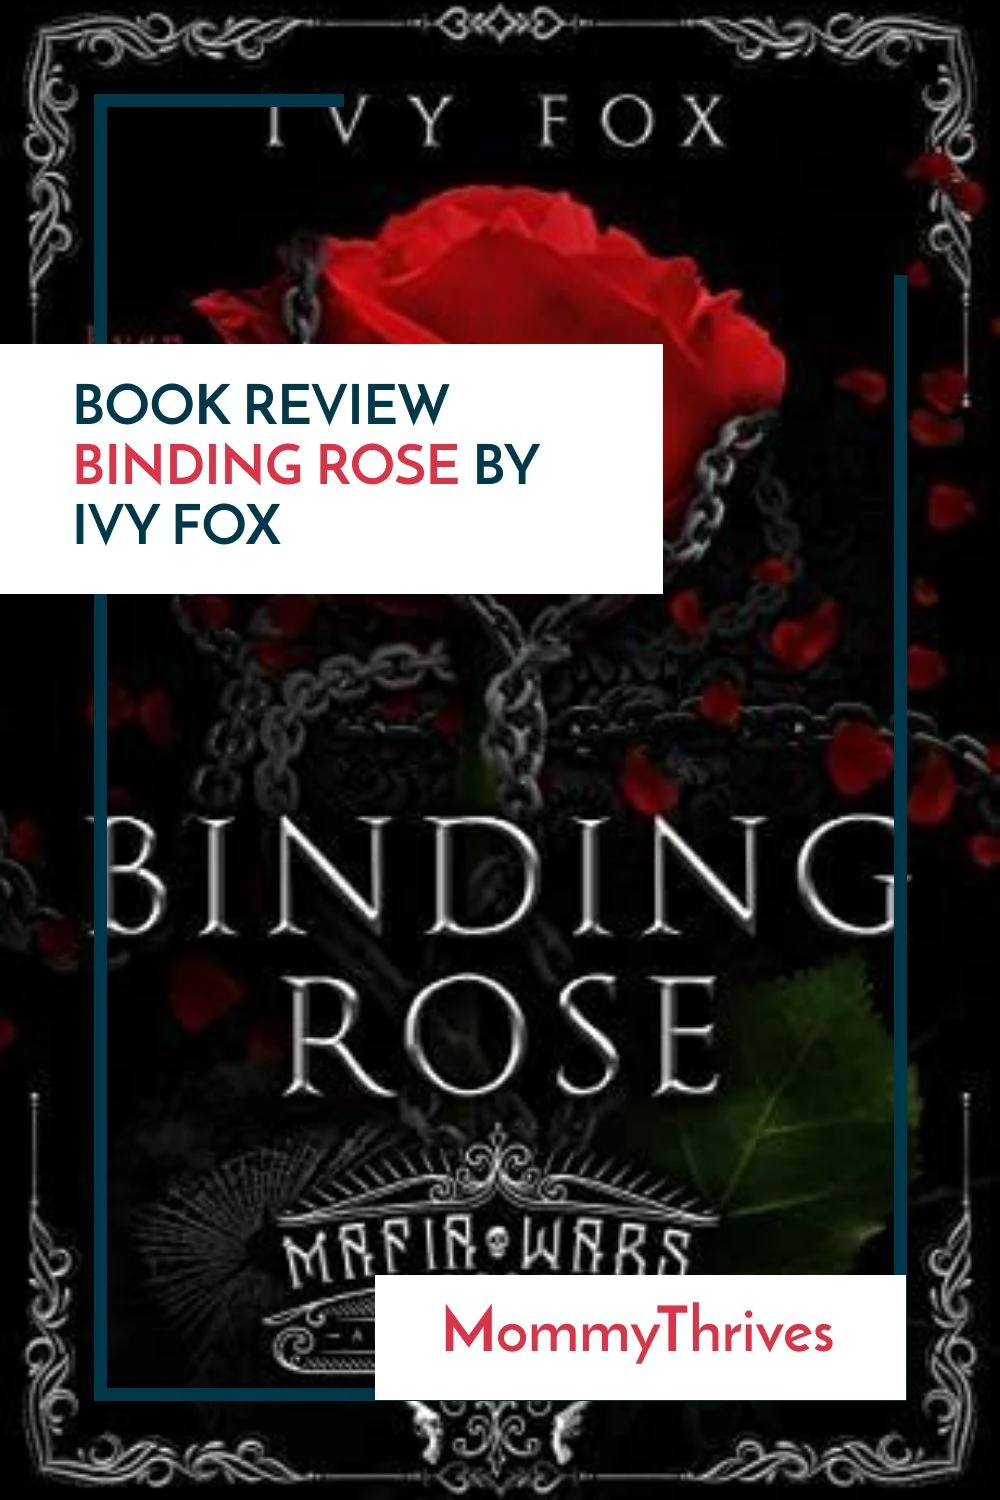 Mafia Wars Series Marfia Dark Romance Book Recommendation - Binding Rose Book Review - Binding Rose by Ivy Fox